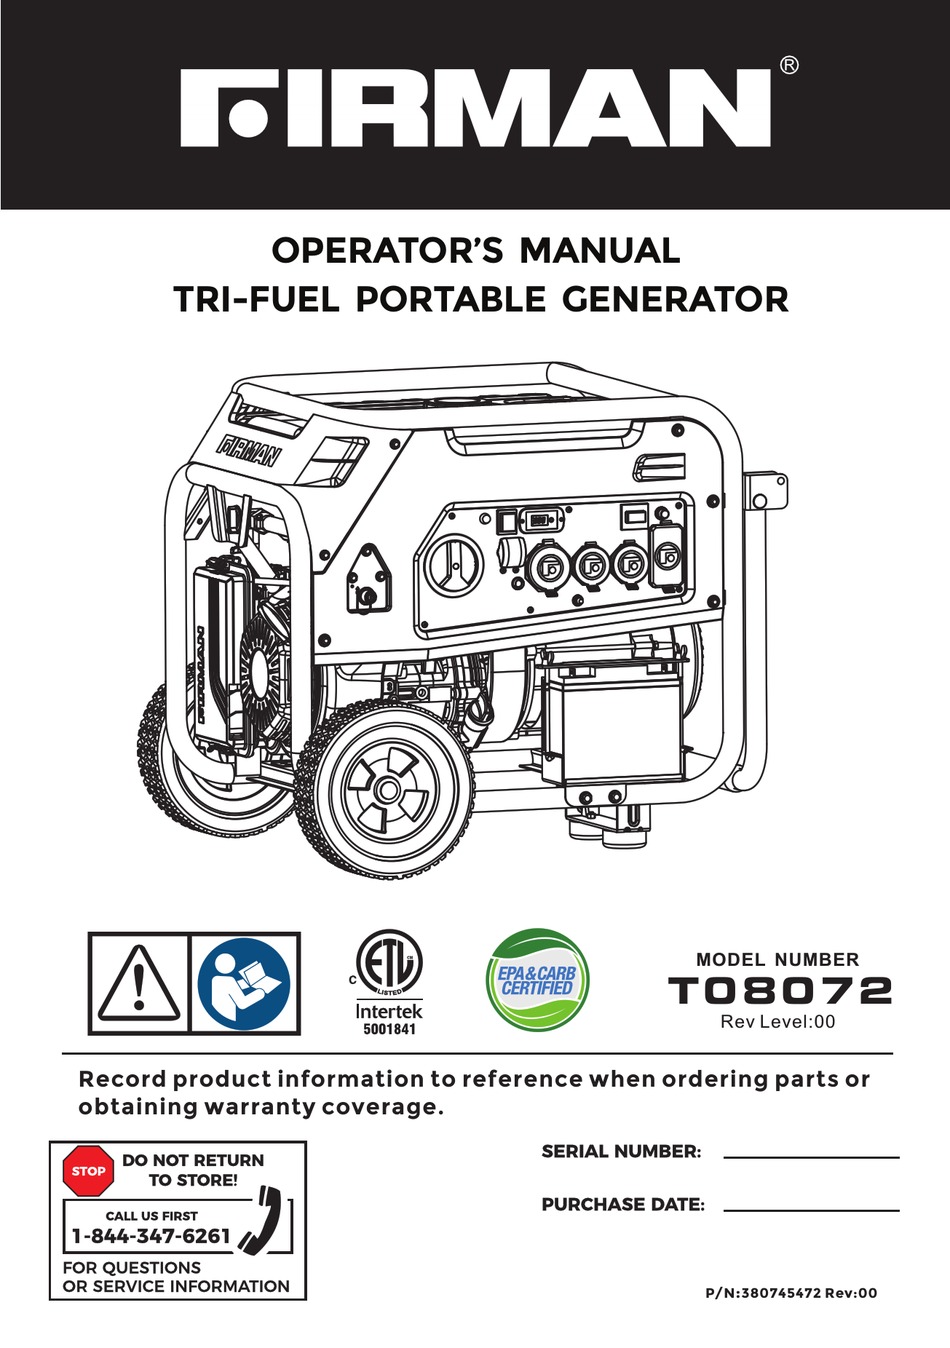 FIRMAN T08072 OPERATOR'S MANUAL Pdf Download | ManualsLib